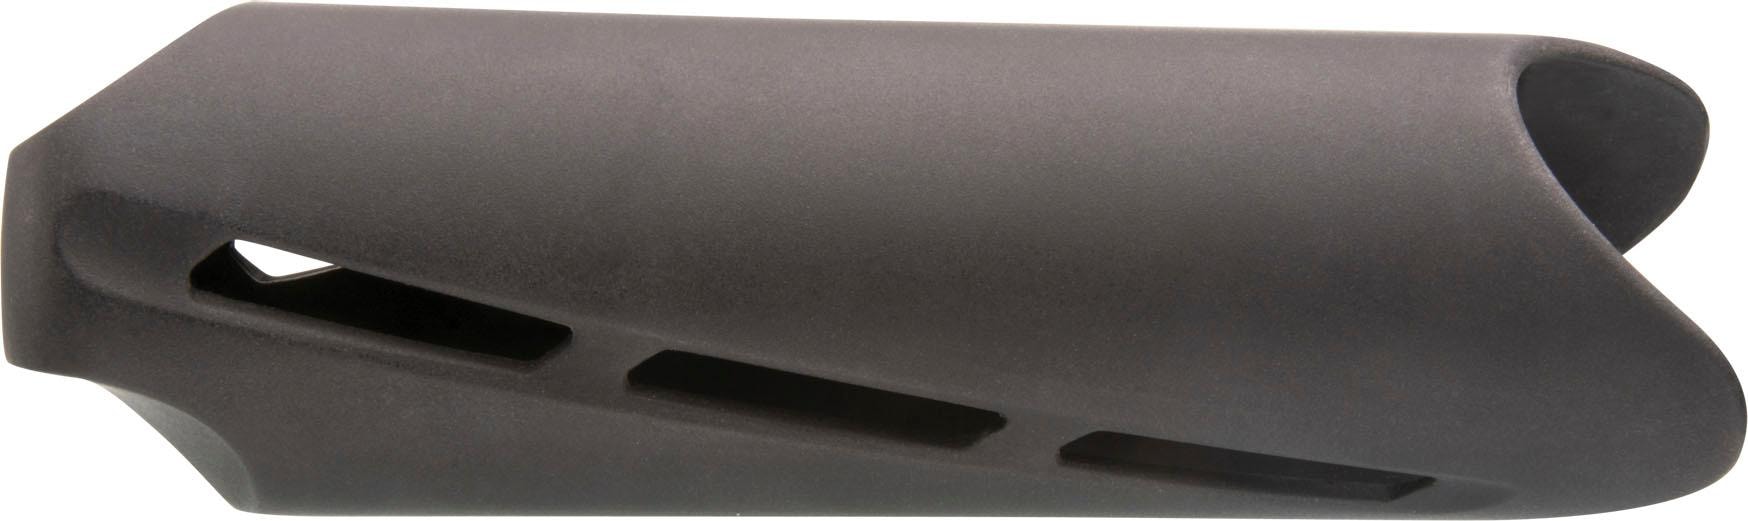 »S6606 XXL Garantie mit Keramik-Turmalin-Beschichtung Straight 3 Jahren Confidence Remington Curl Haarglätter«, & Glätteisen